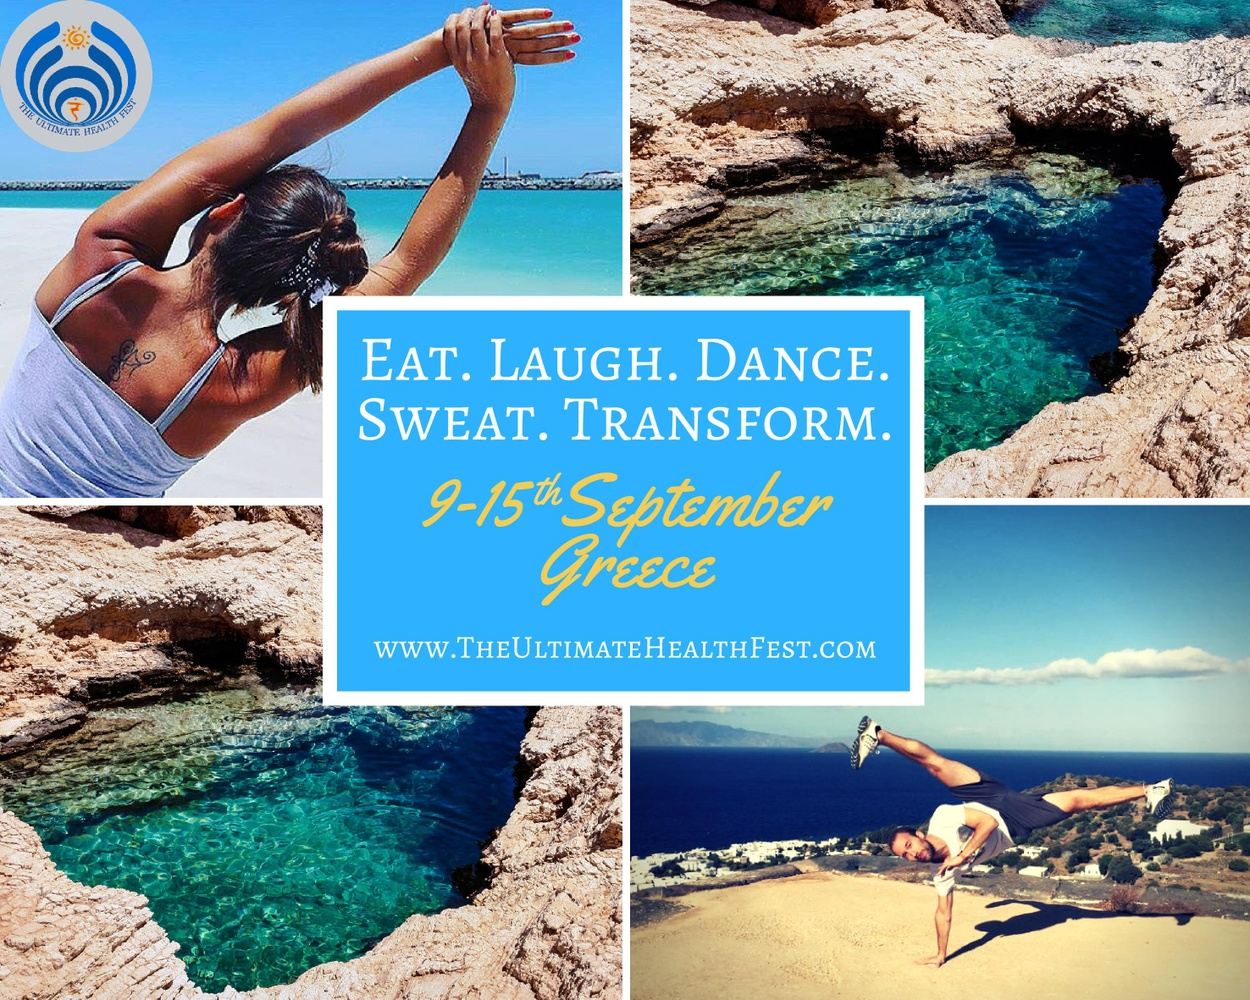 The Ultimate Health Fest - Eat. Laugh. Dance. Sweat. Transform.